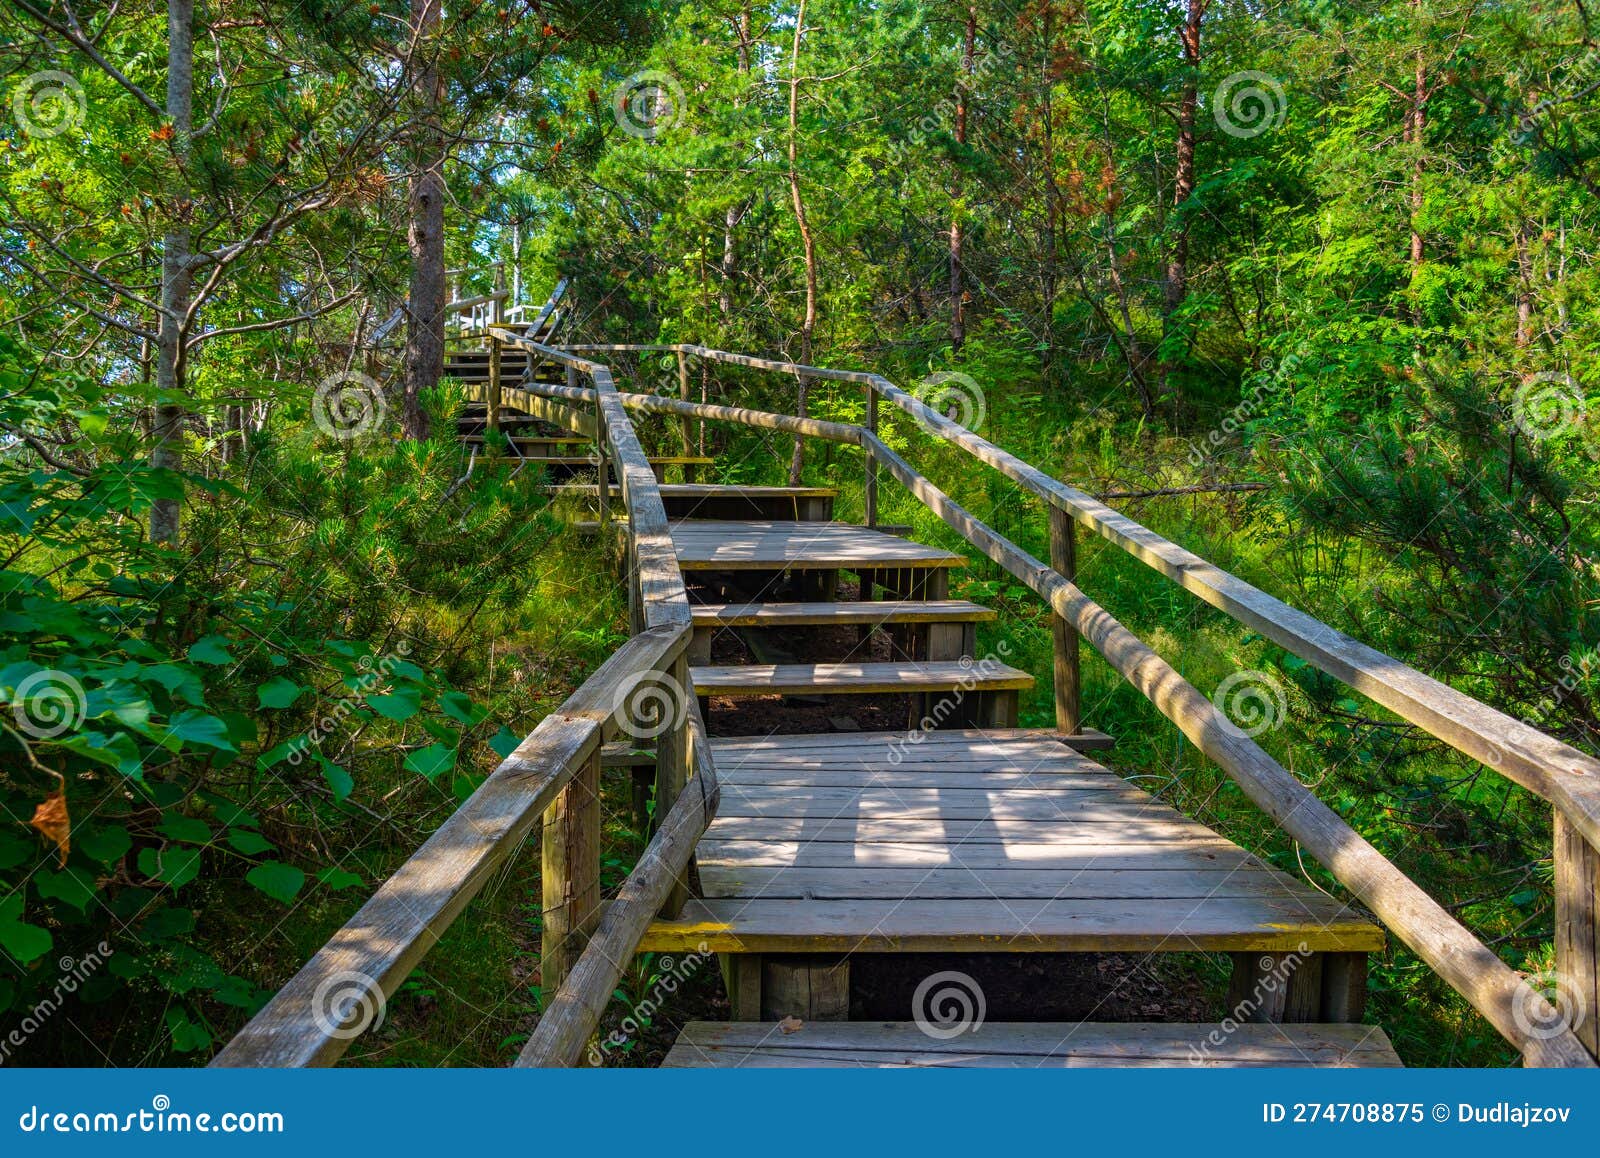 Forest Trail at Saulkrasti Sand Dunes in Latvia Stock Image - Image of ...